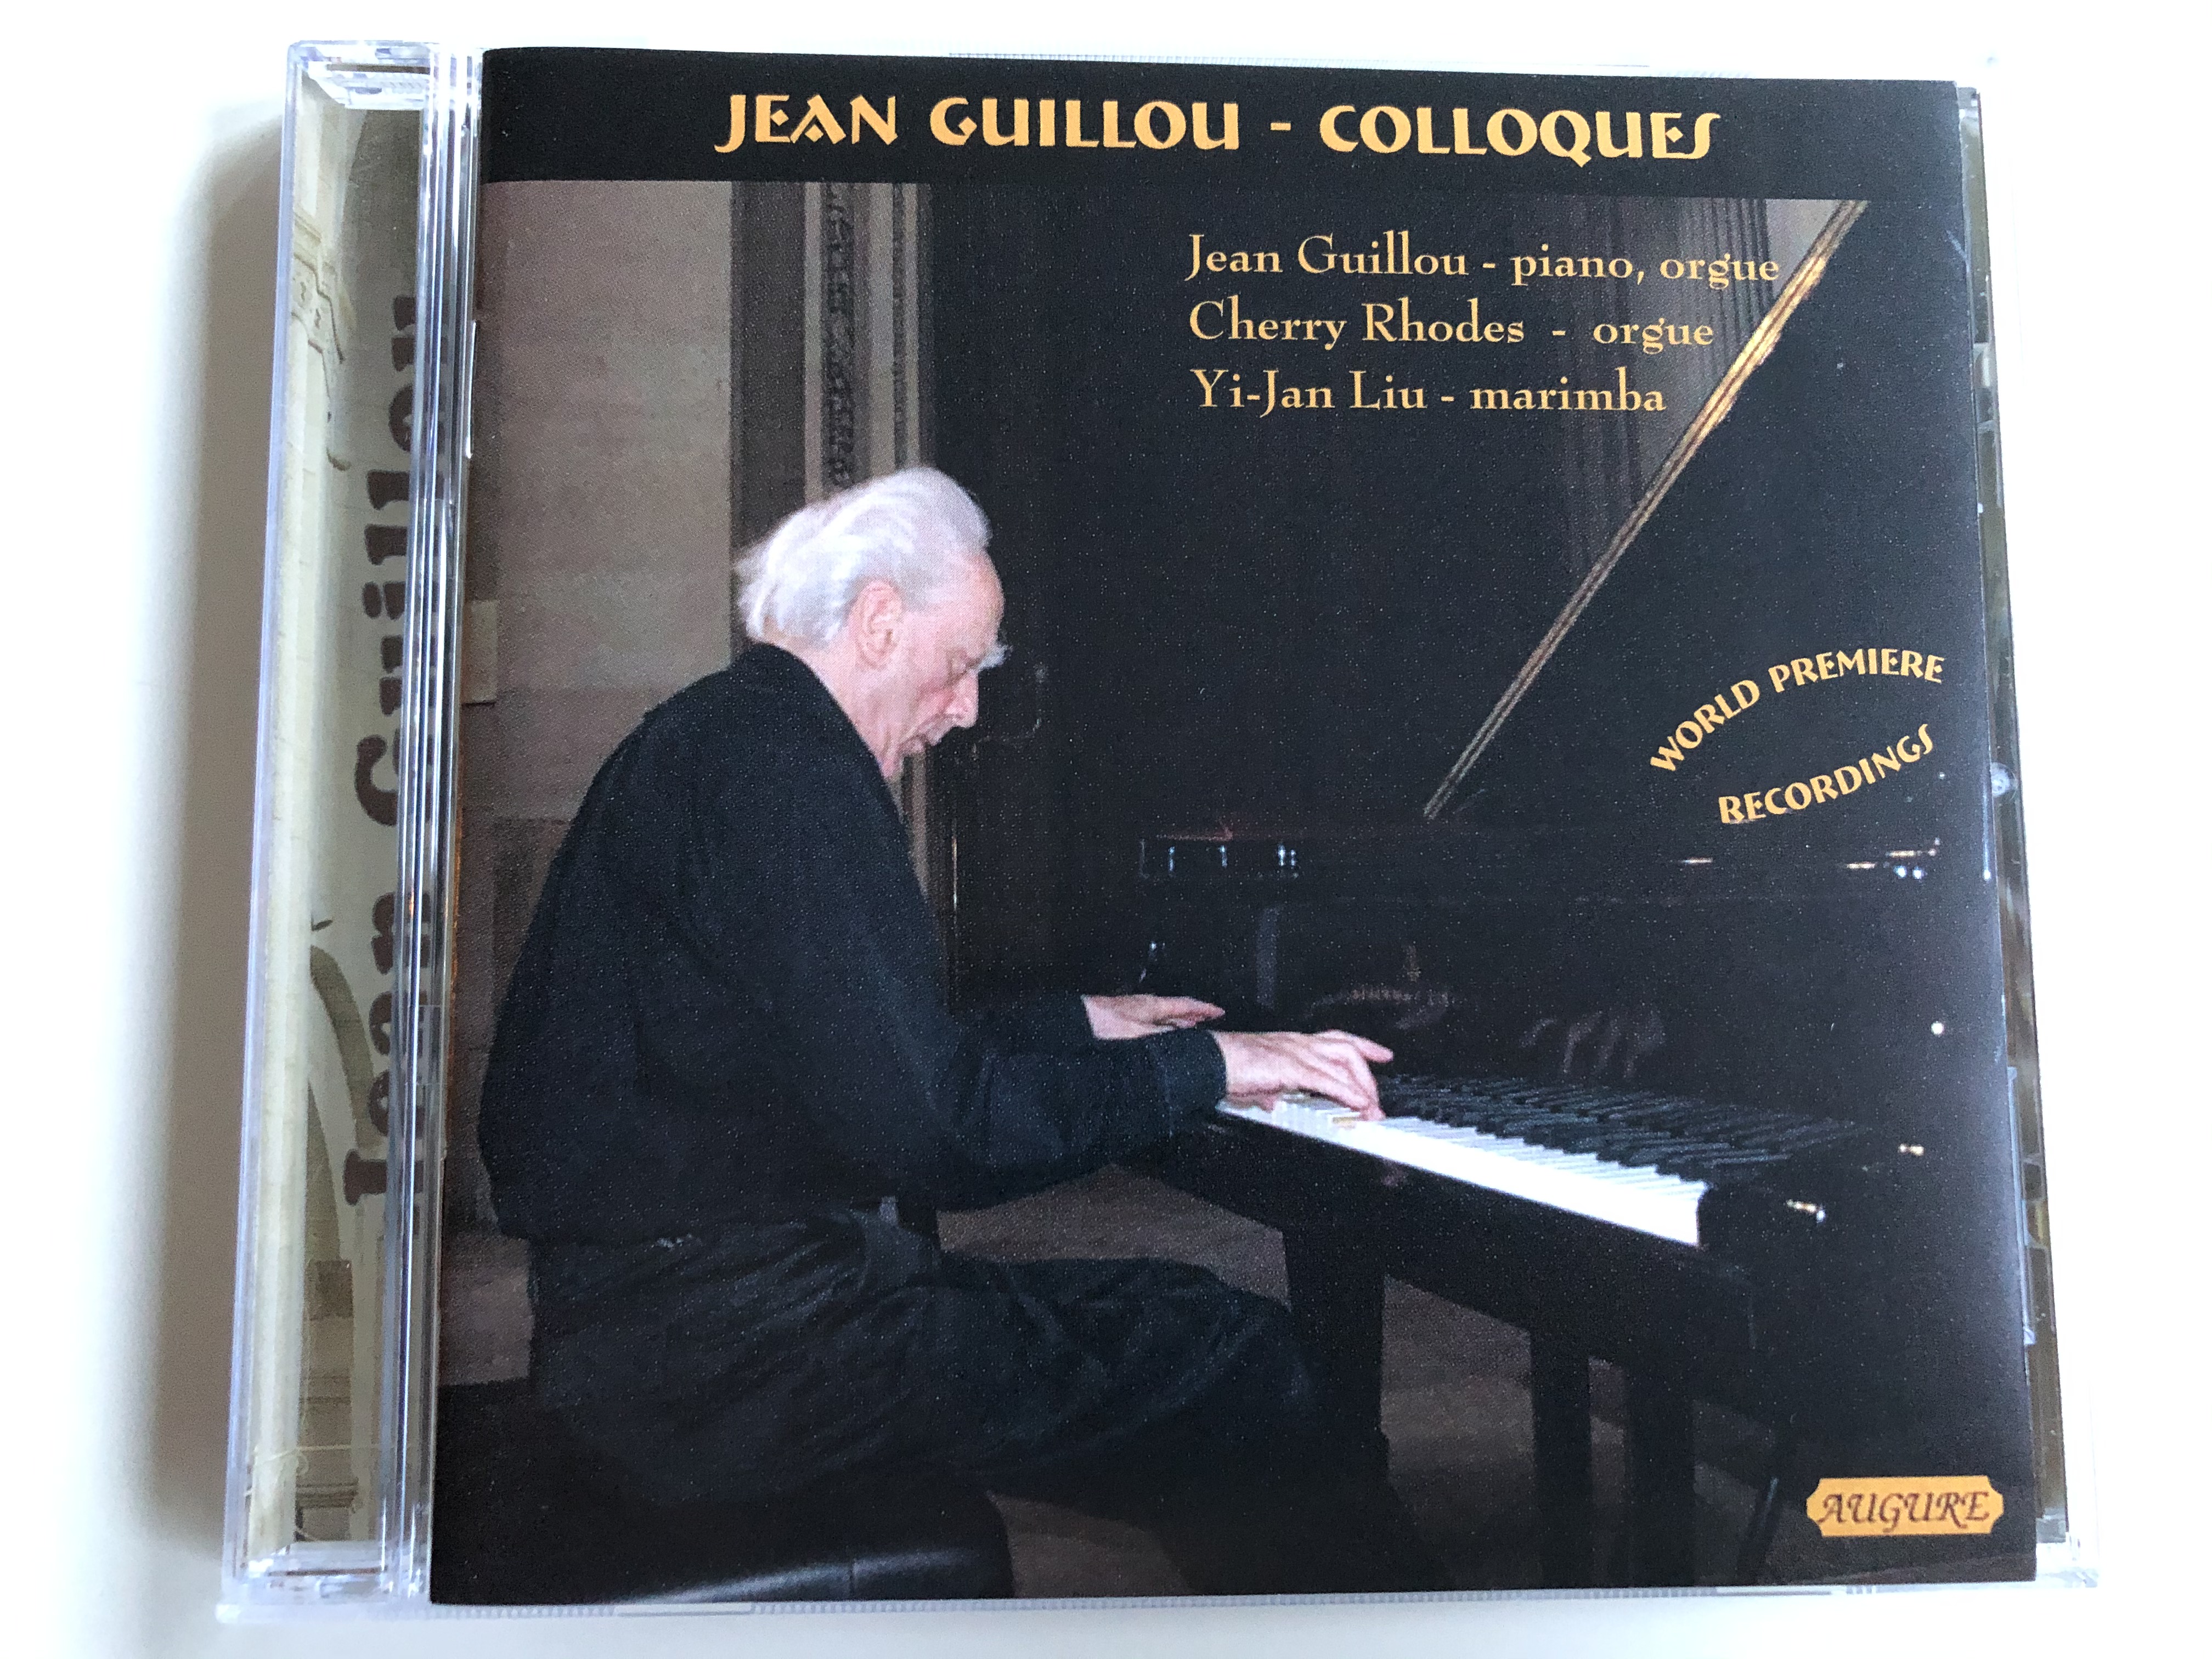 jean-guillou-colloques-jean-guillou-piano-orgue-cherry-rhodes-orgue-yi-jan-liu-marimba-world-premiere-recordings-augure-audio-cd-2009-aug-0904-1-.jpg